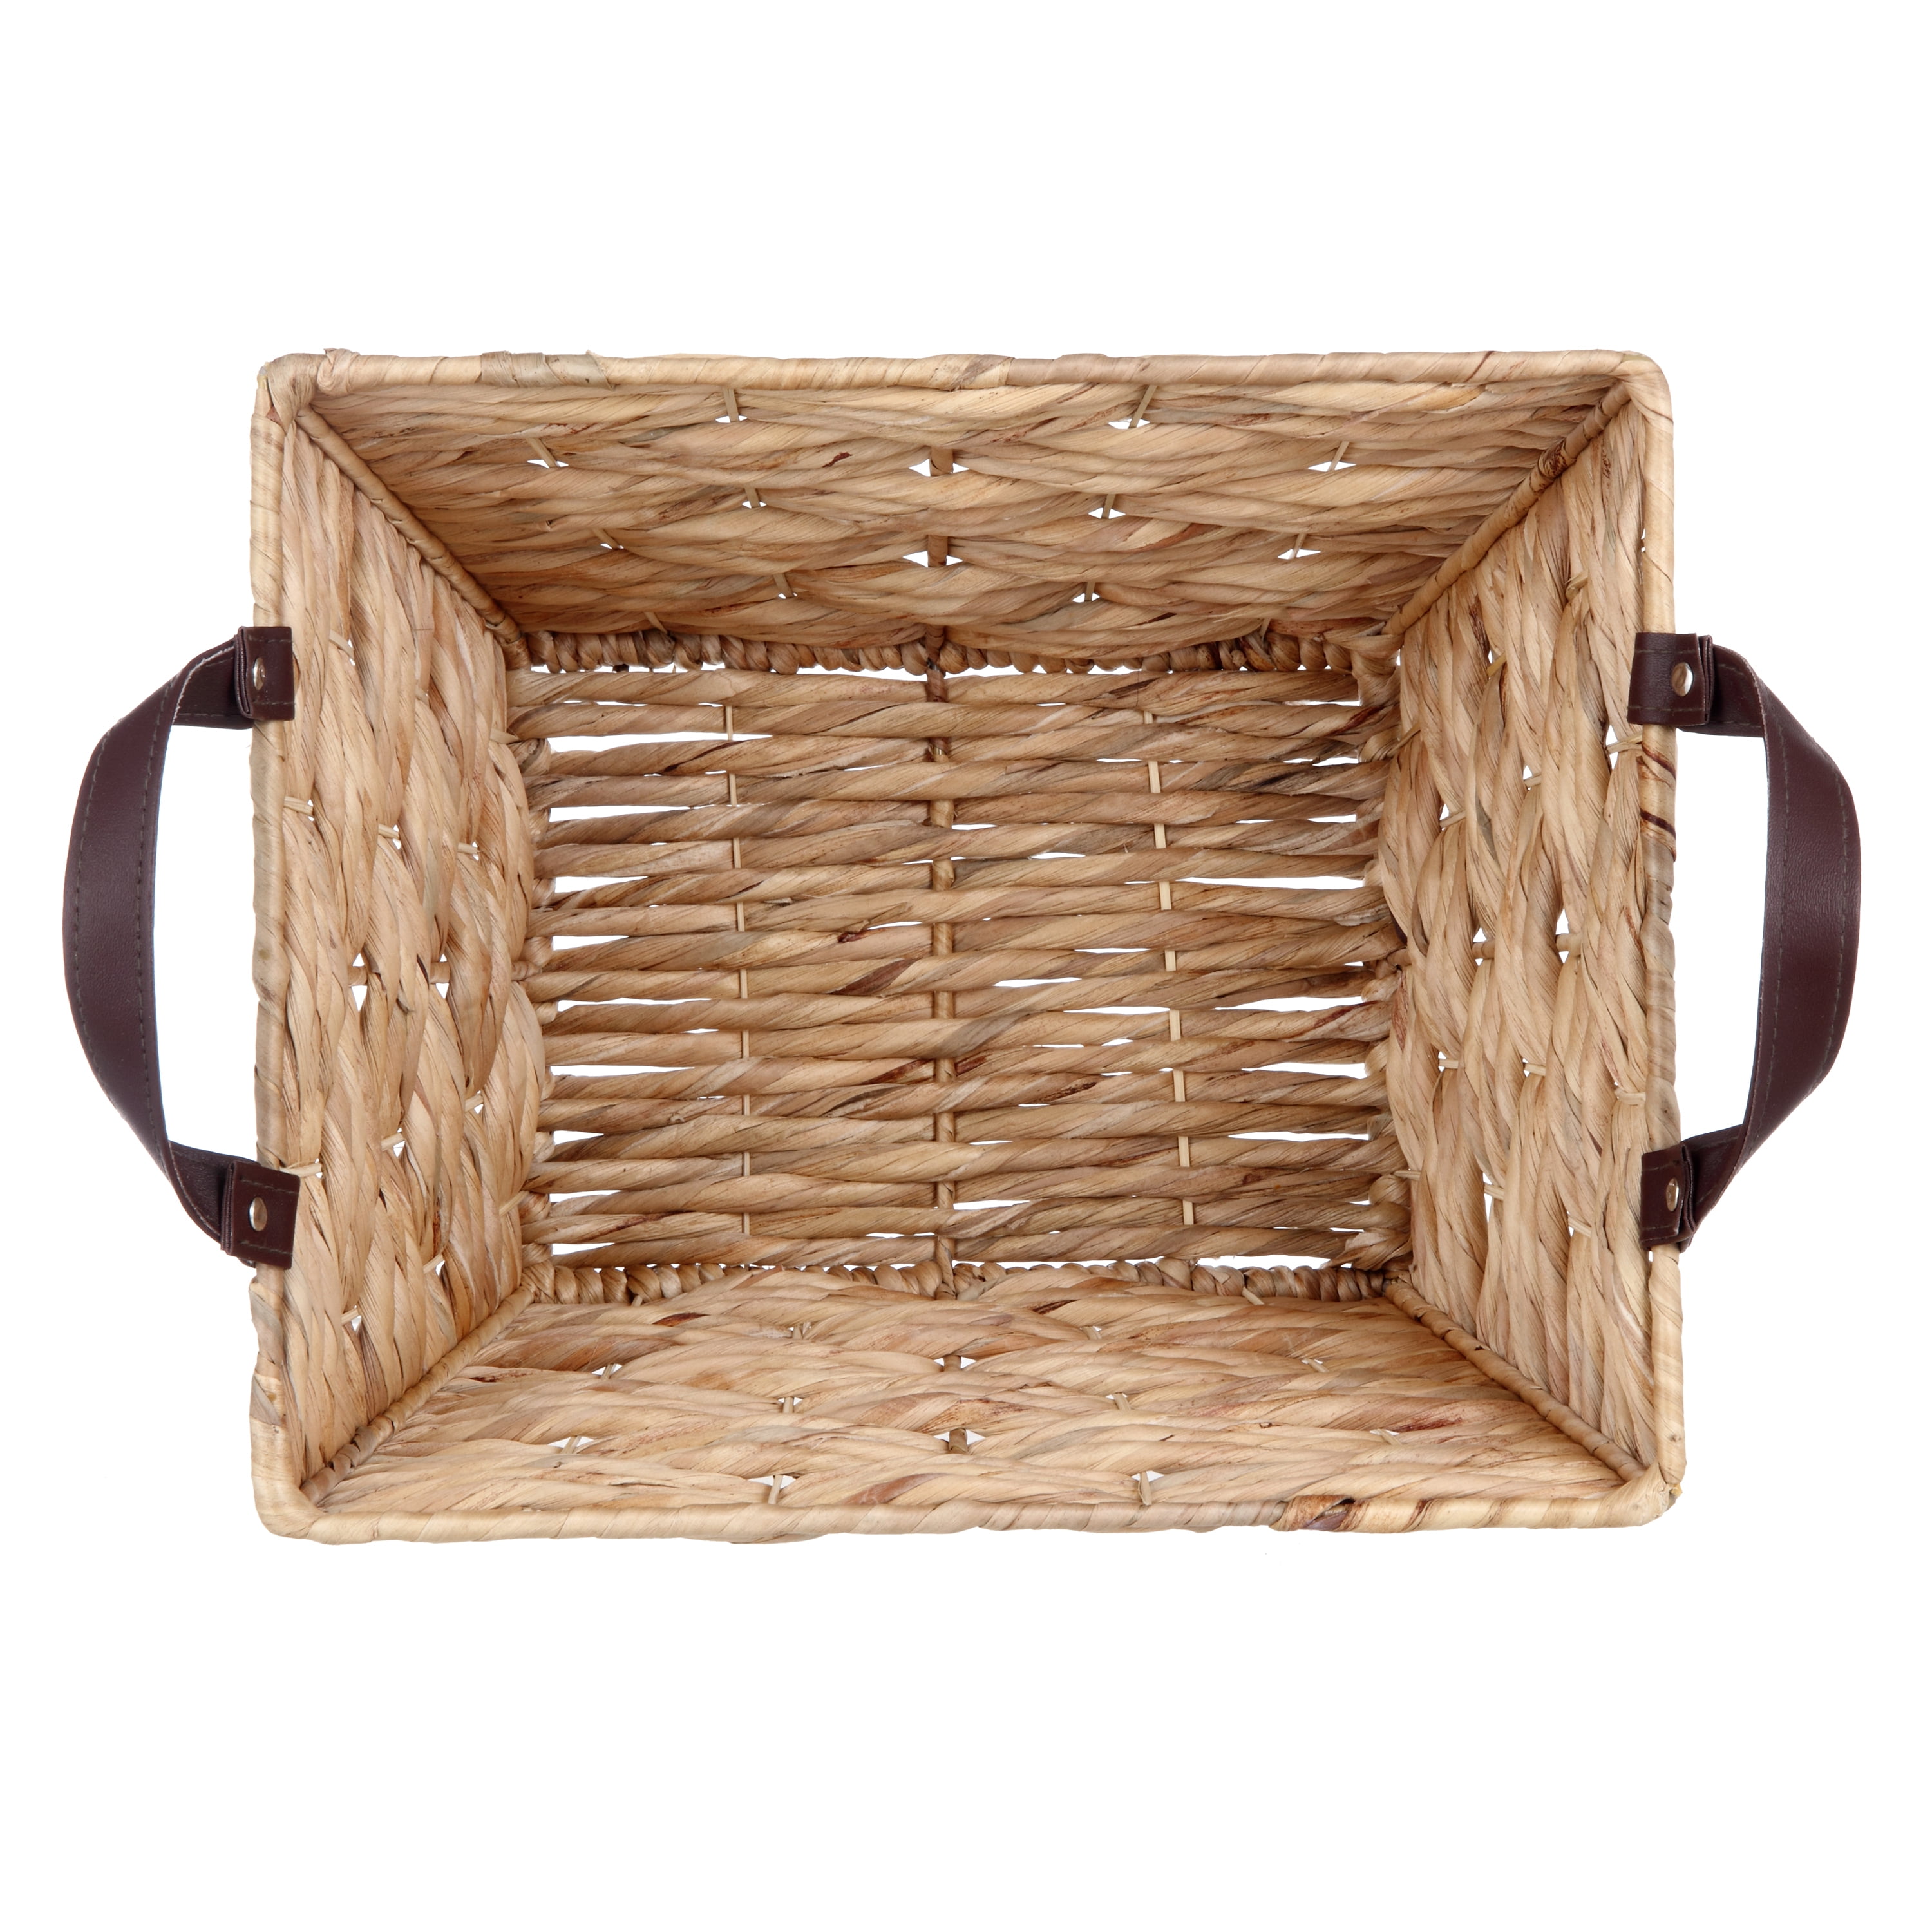 Rectangle Water Hyacinth Open-Weave Basket - Set of 2 - Greenvibe Ltd